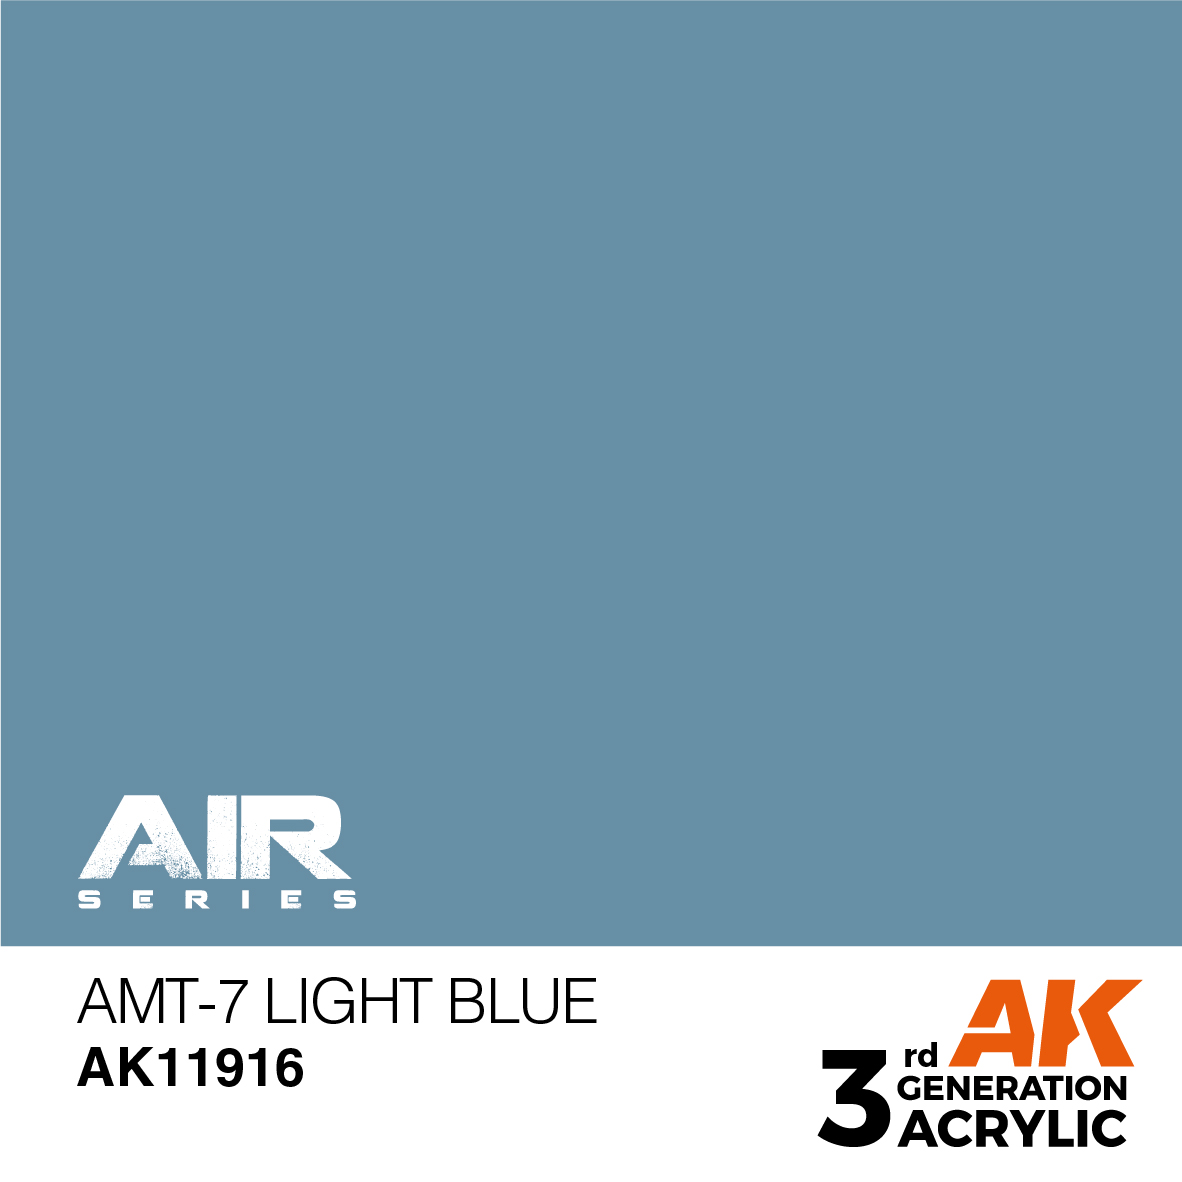 AMT-7 Light Blue – AIR